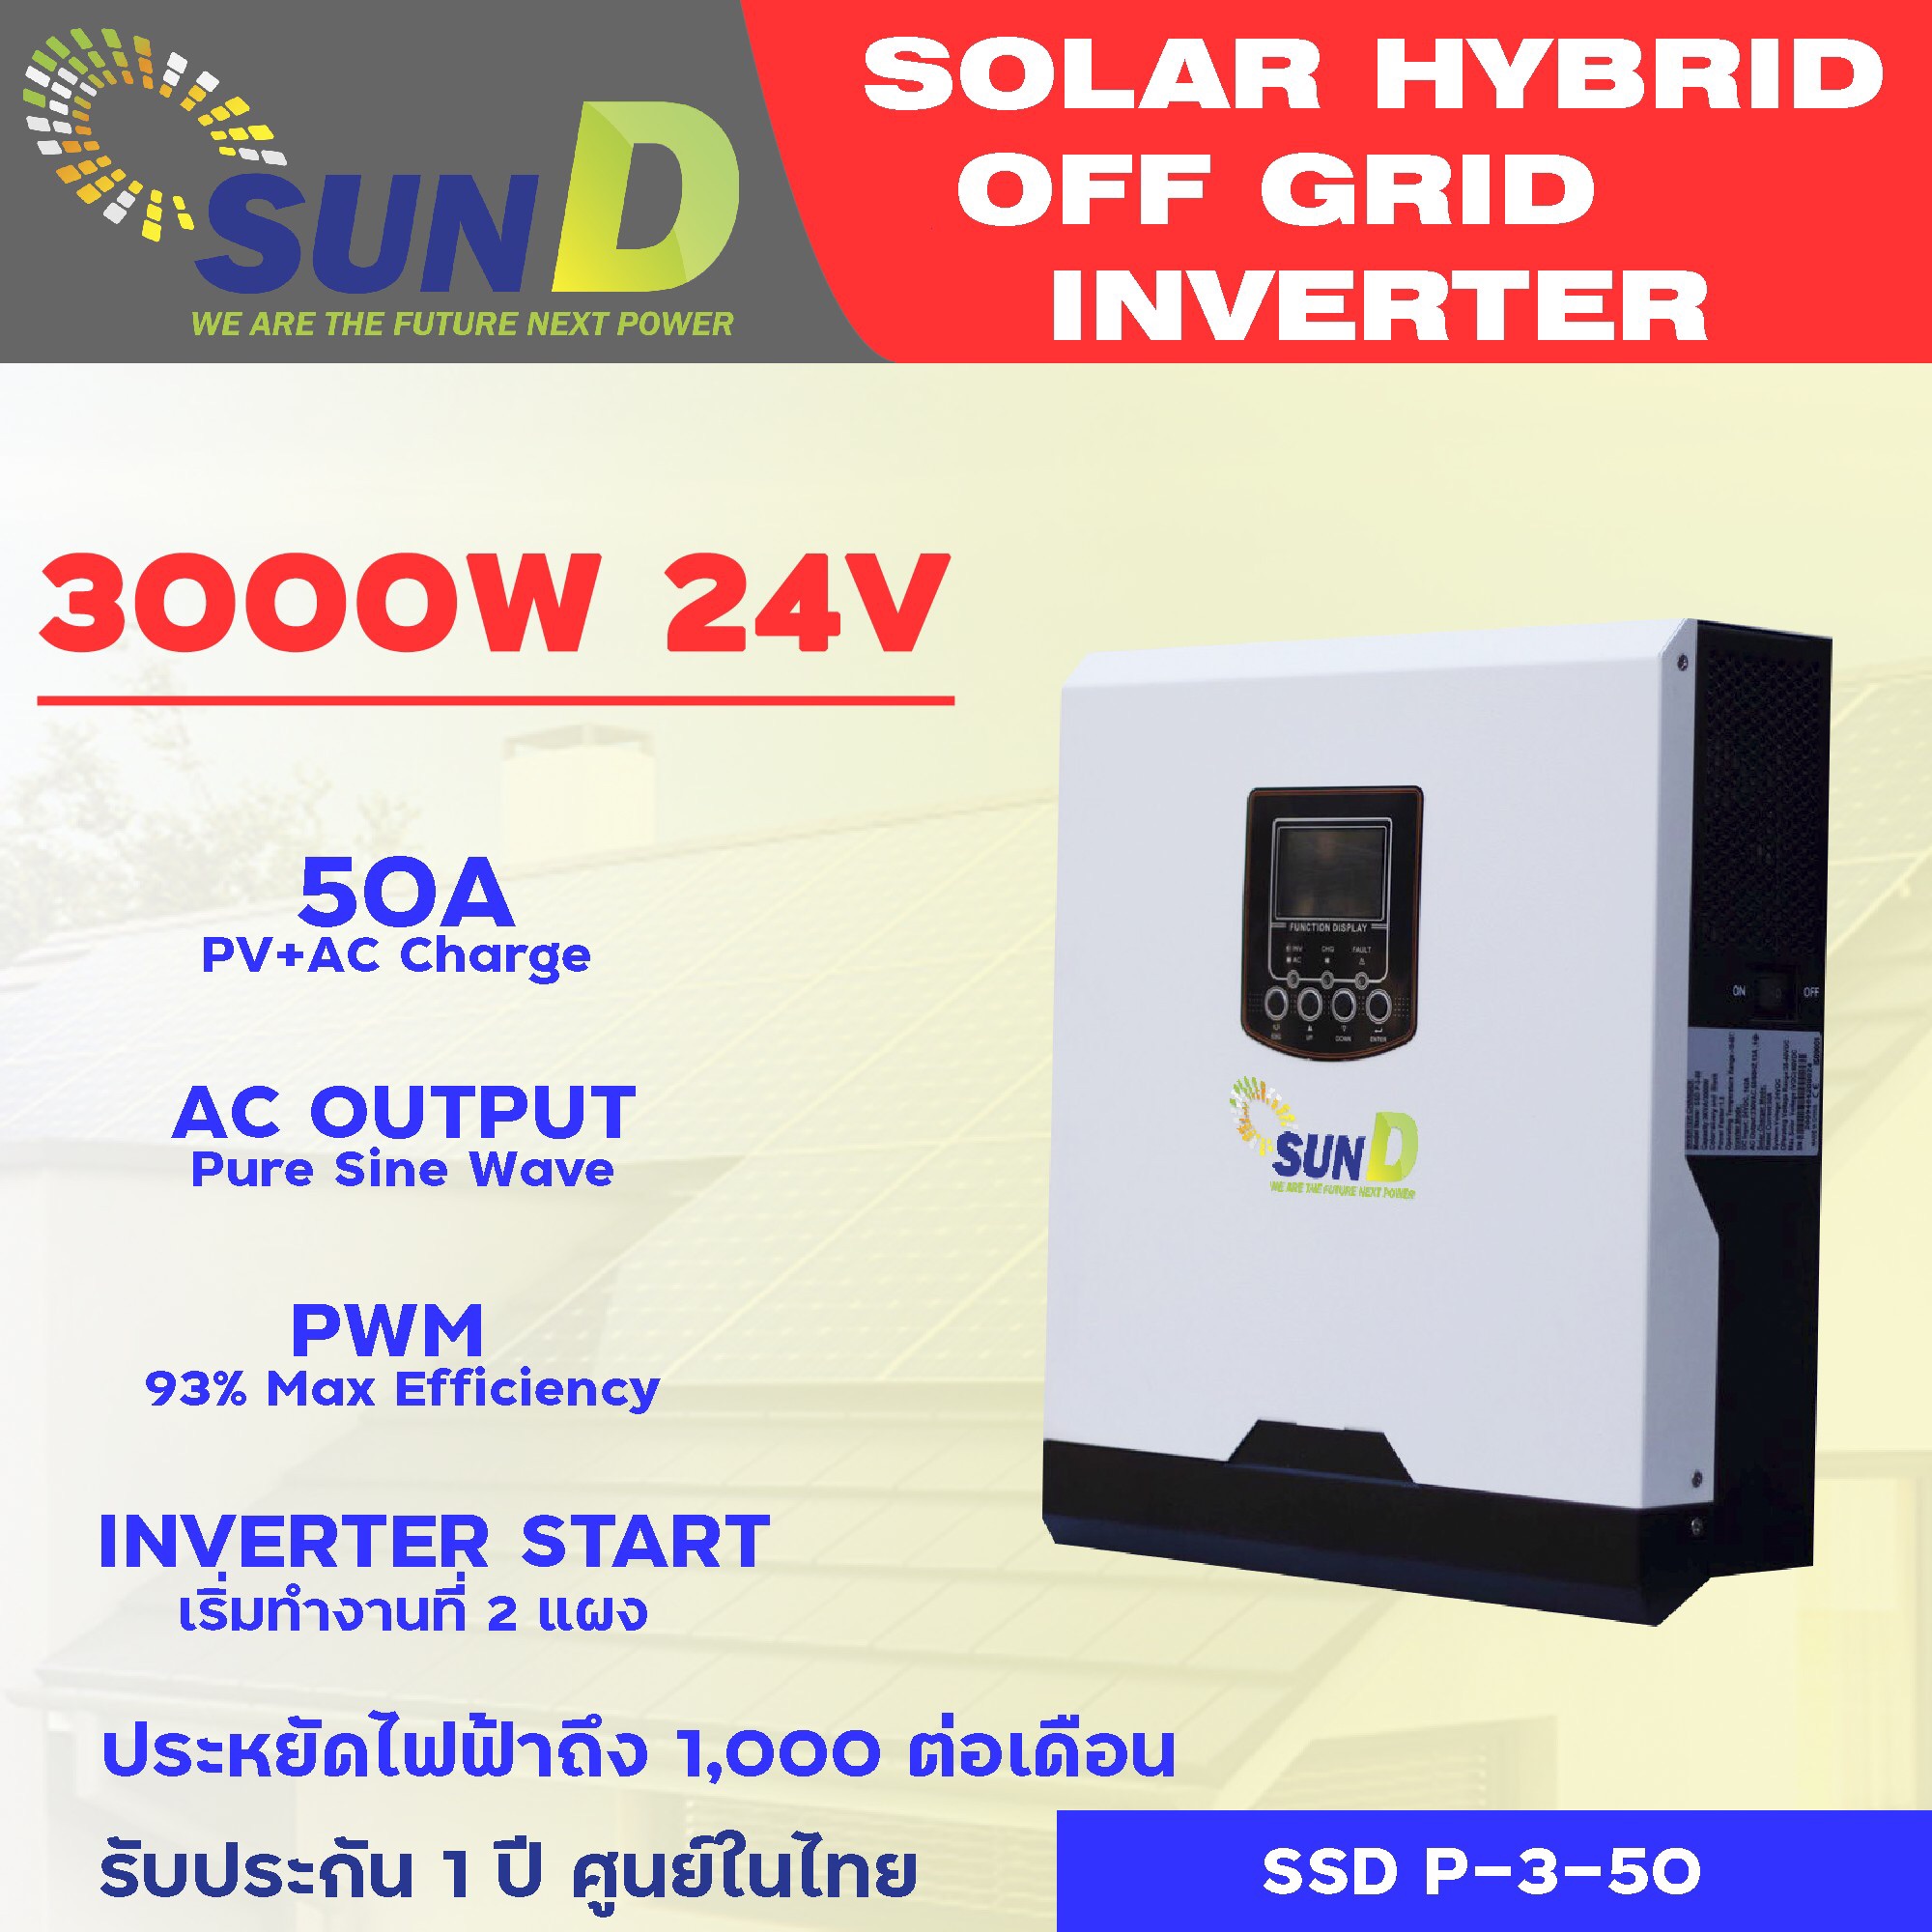 Hybrid off grid solar Inverter ไฮบริด ออฟกริด อินเวอร์เตอร์  3000w SUN D Inverter